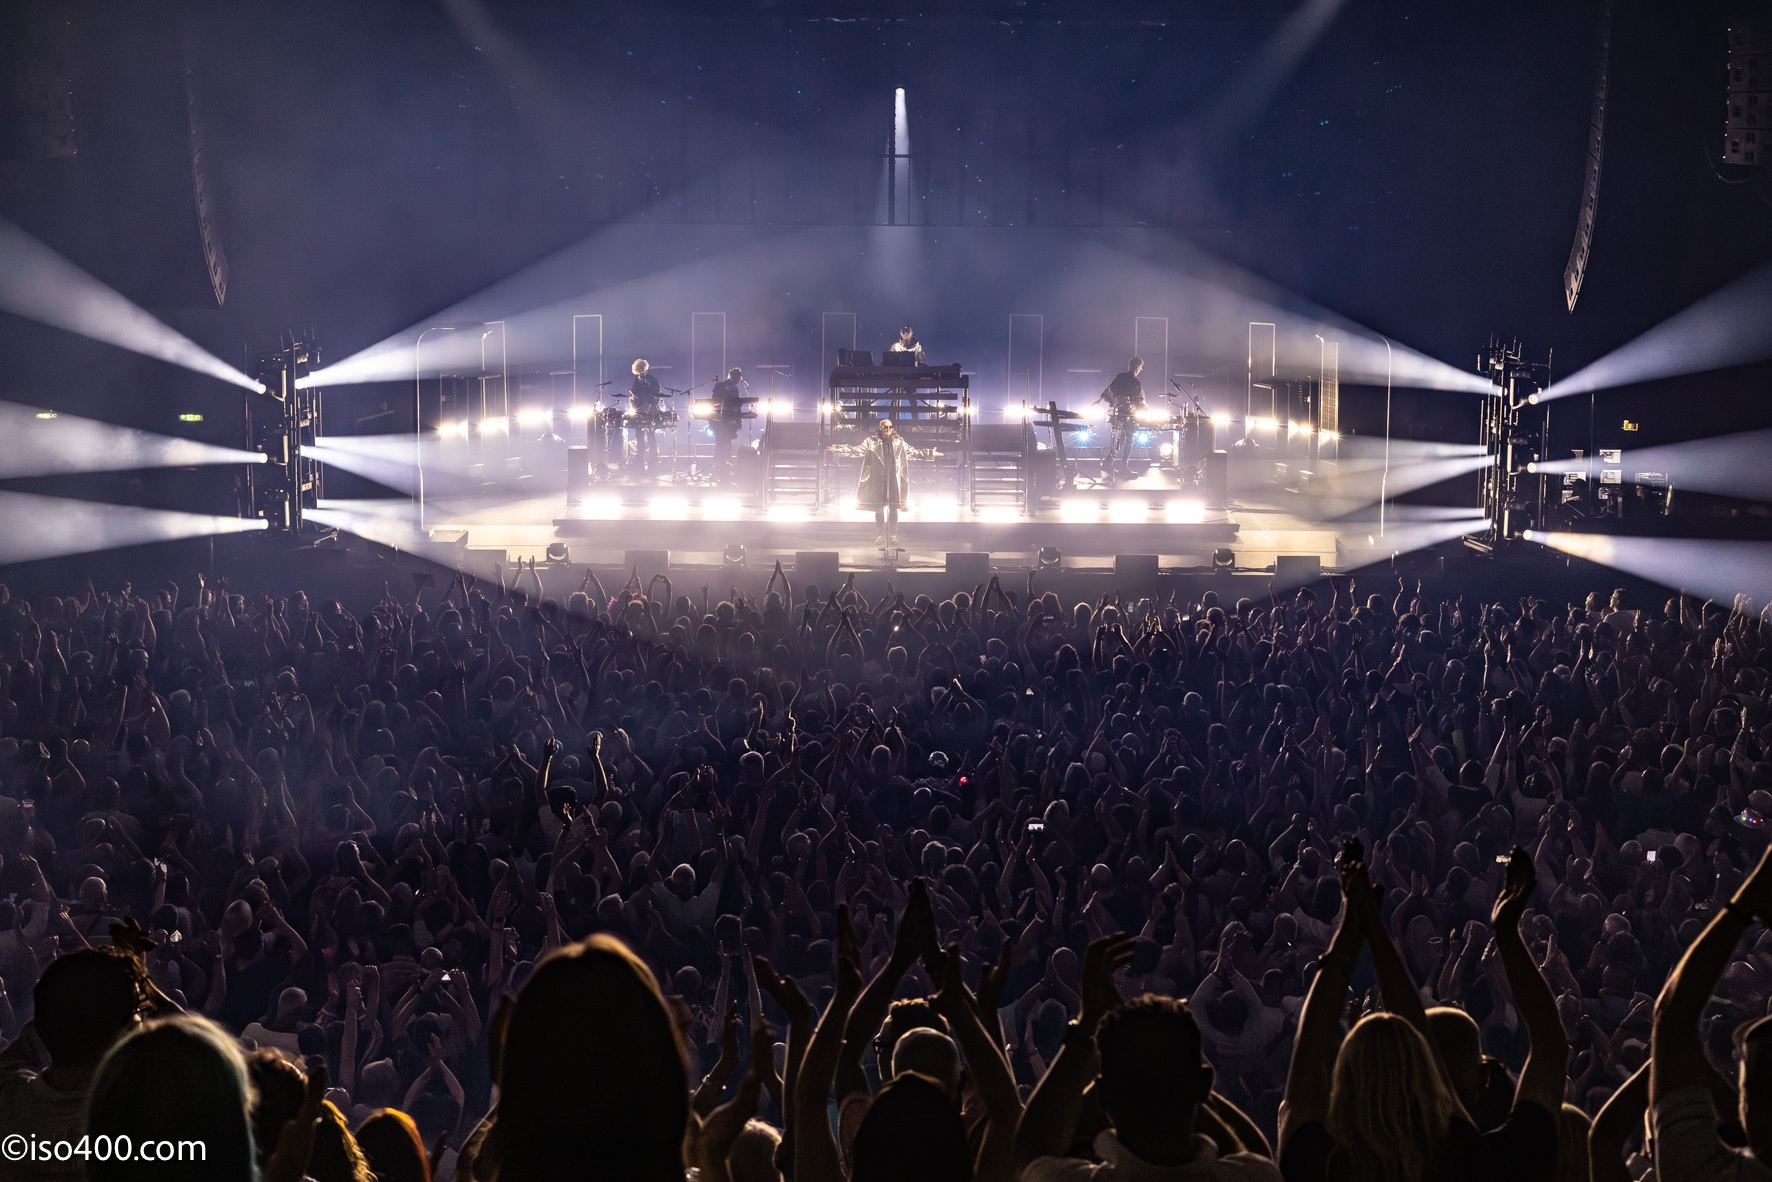 Pet Shop Boys' Greatest Hits Concert Film 'Dreamworld' is Coming